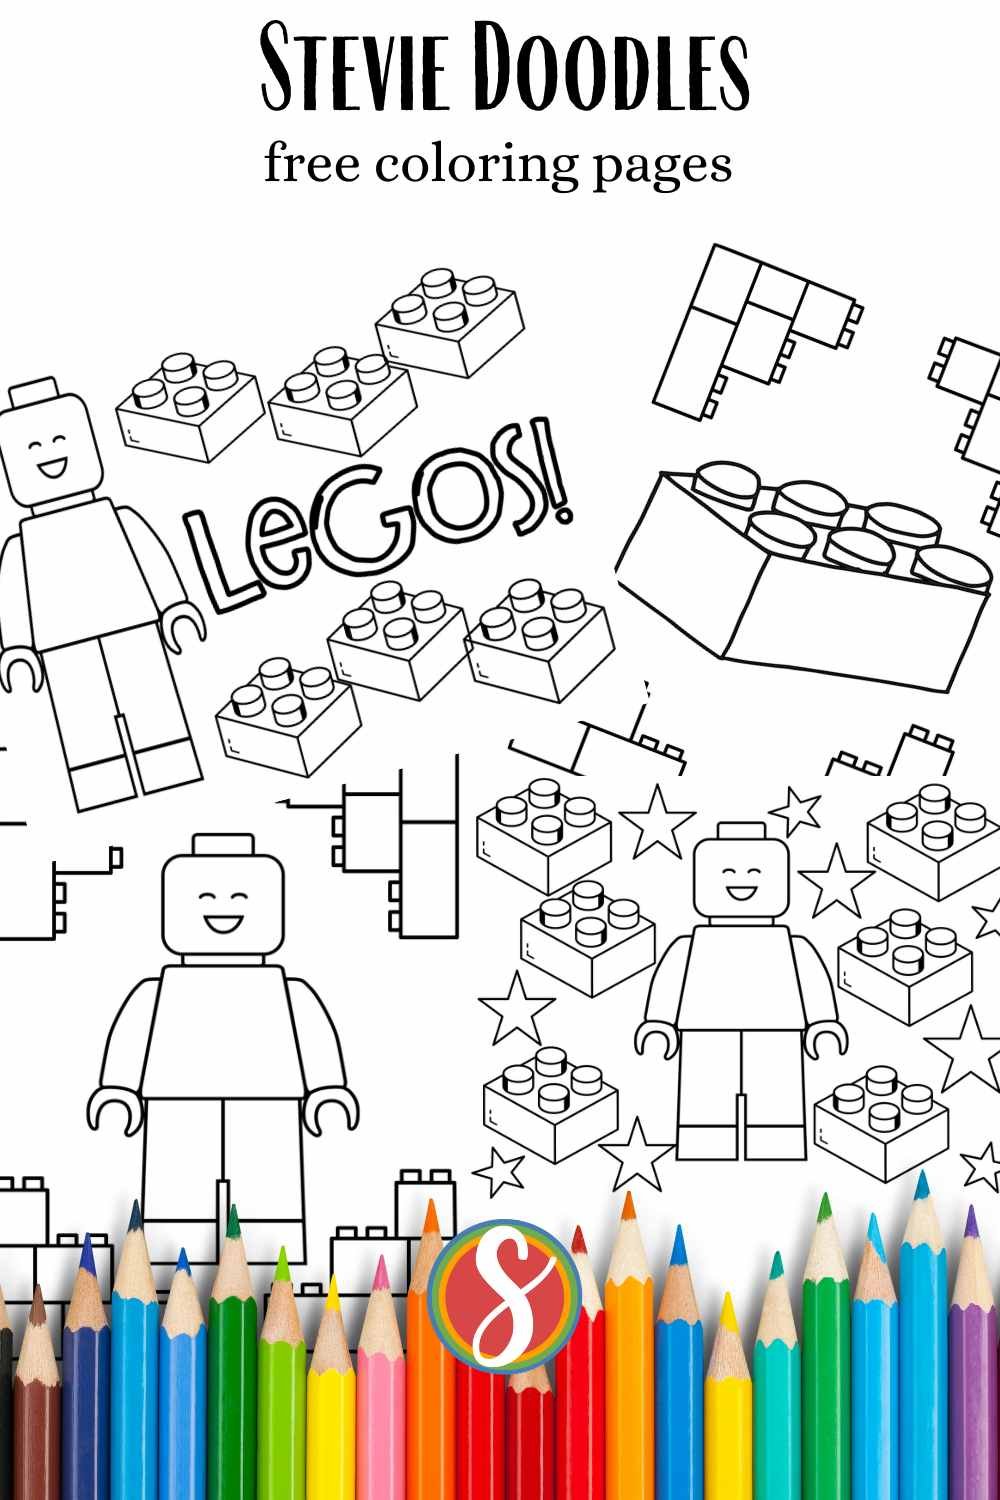 Free lego coloring pages â stevie doodles